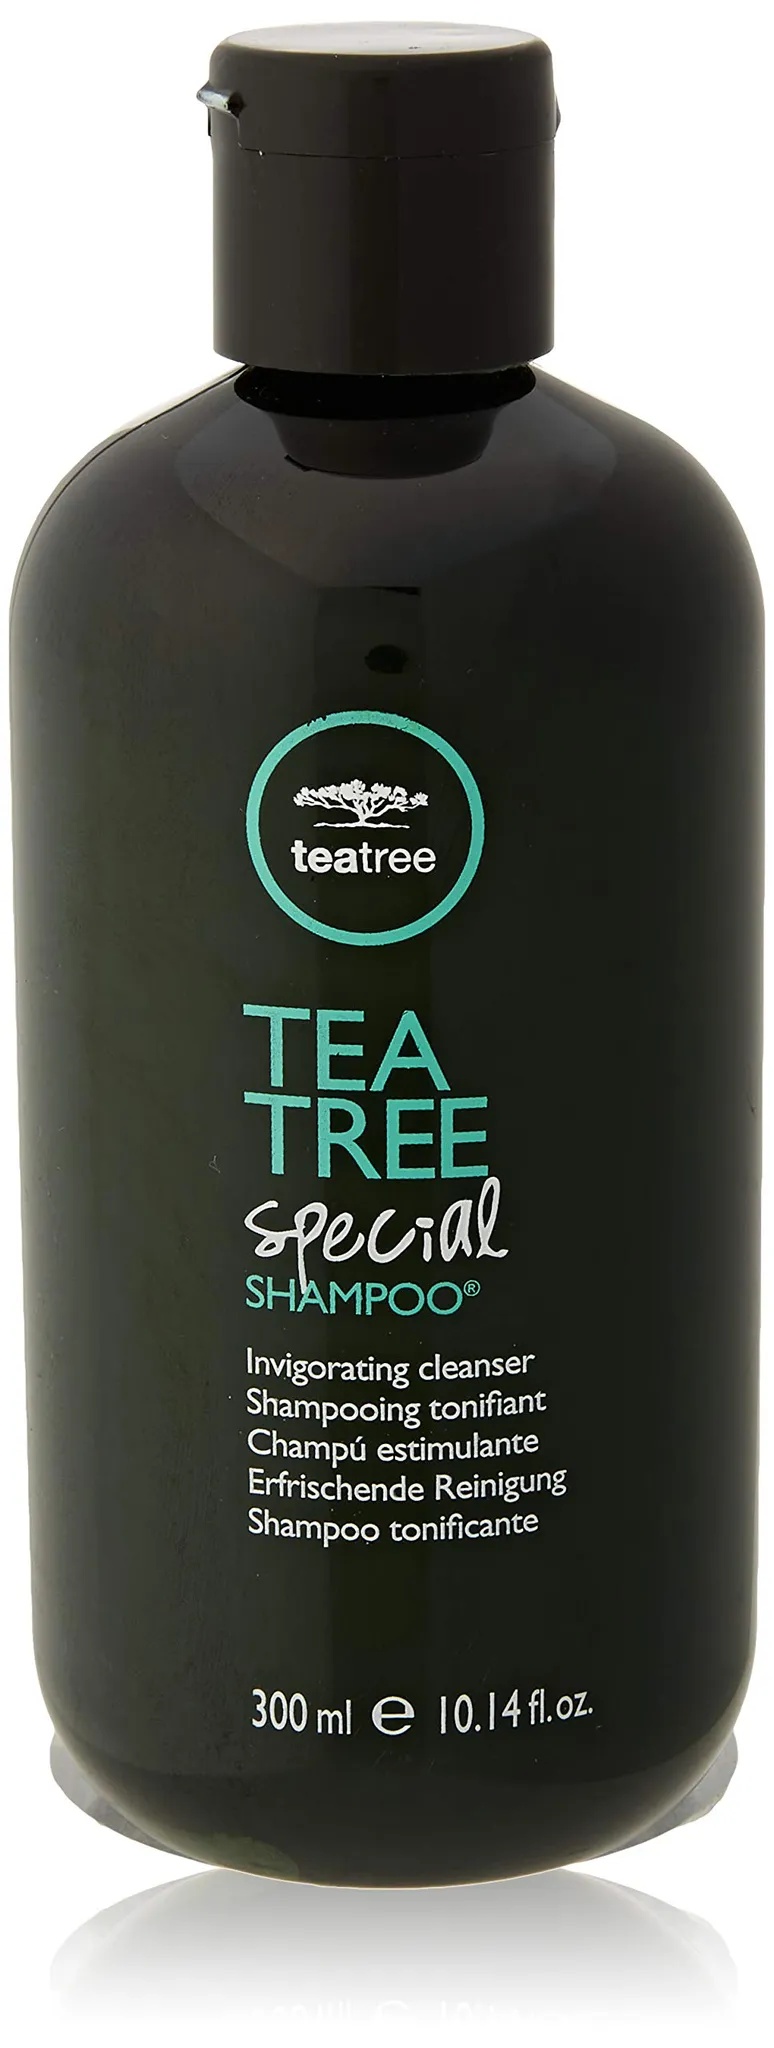 paul mitchell tea tree special shampoo